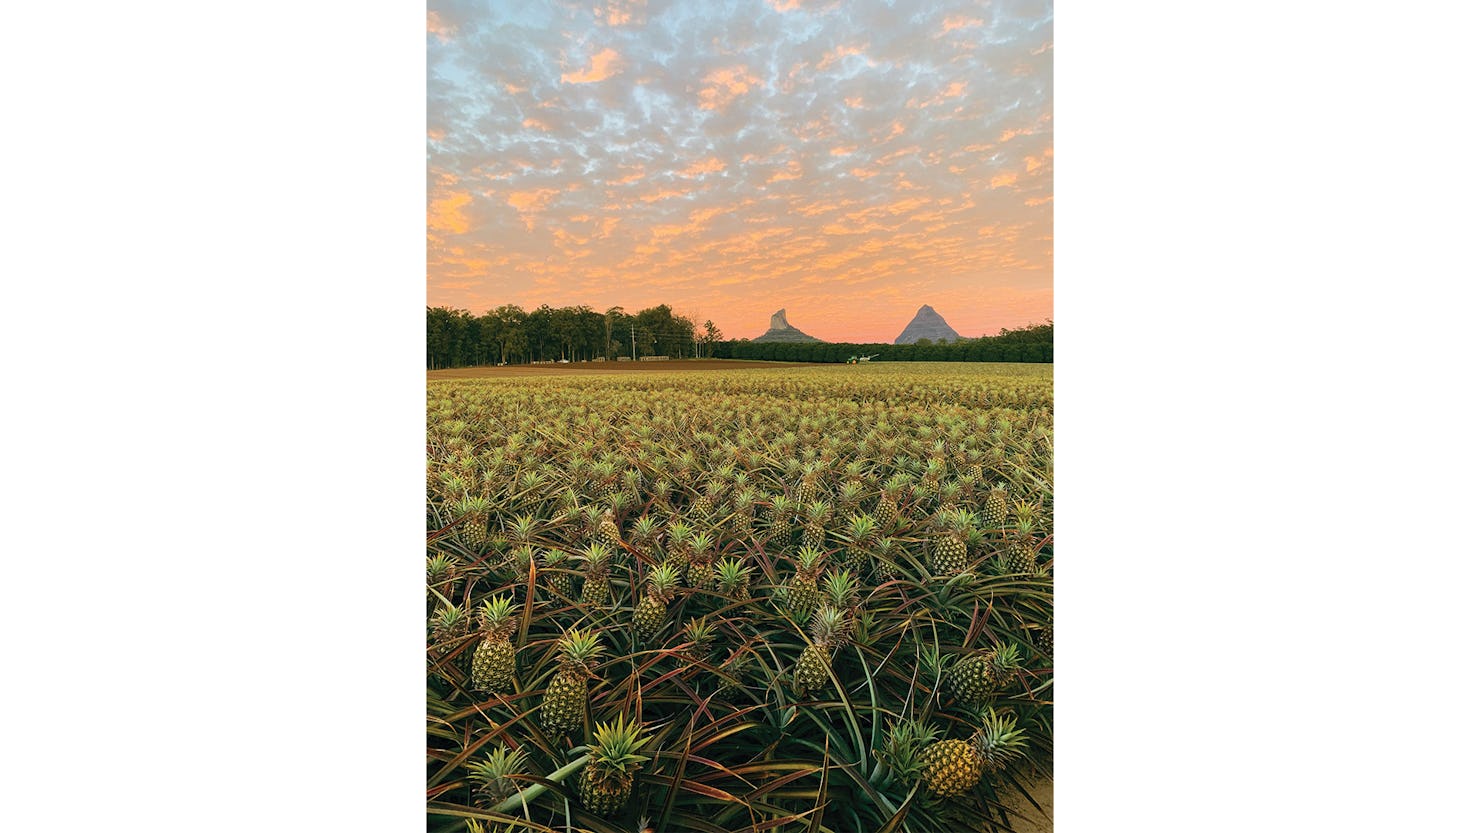 Pineapple Plantation - Morgan’s Pines, Glasshouse Mountains. Credit: @PureGoldPineapples